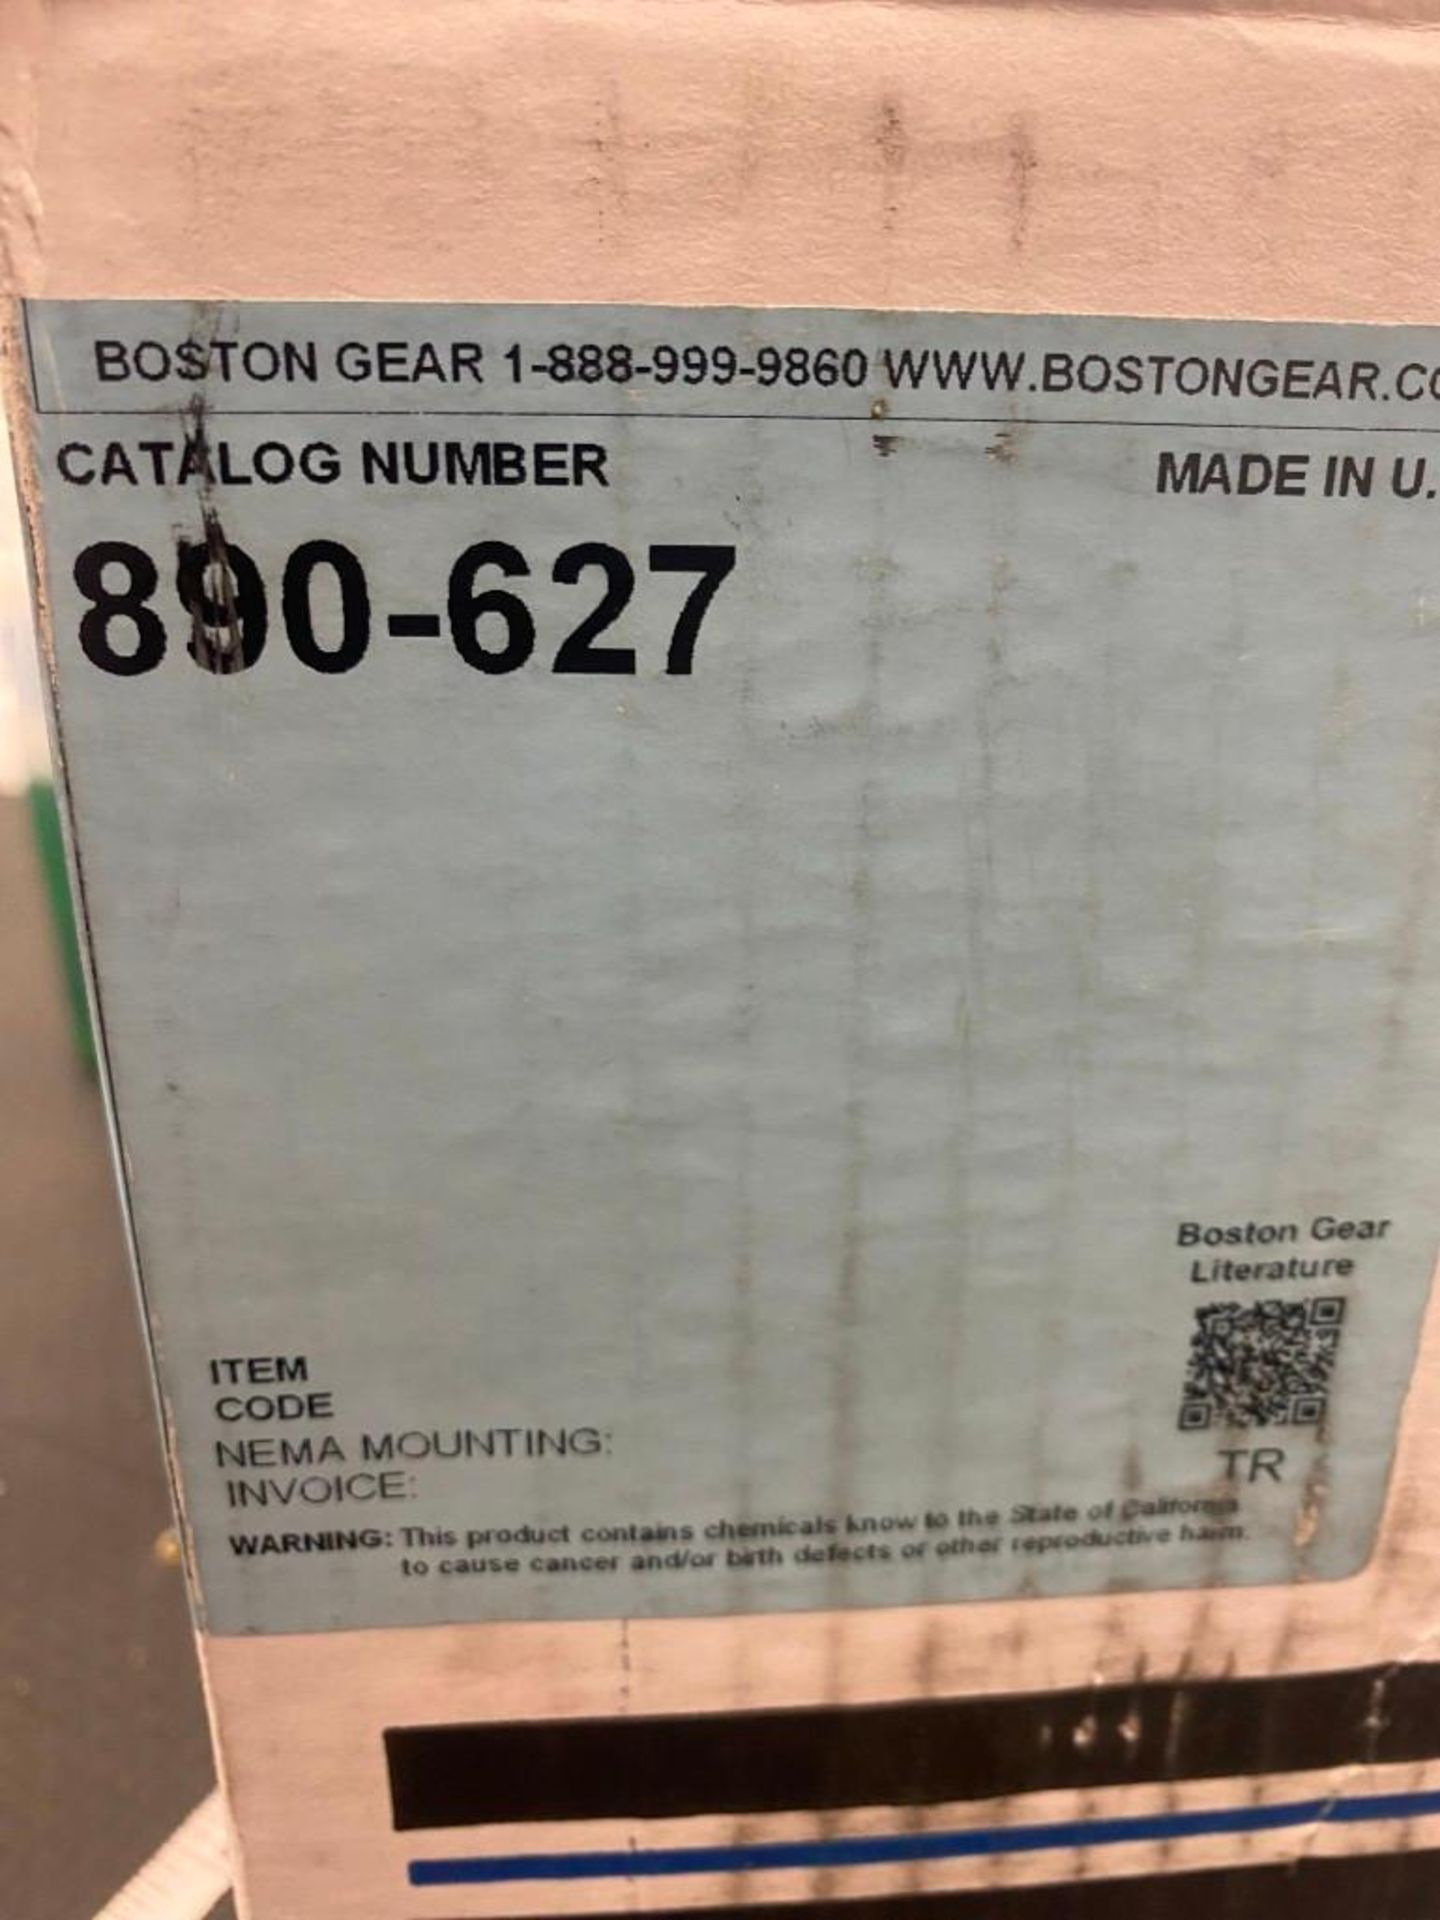 NEW IN BOX BOSTON GEAR 890-627 - Image 4 of 4